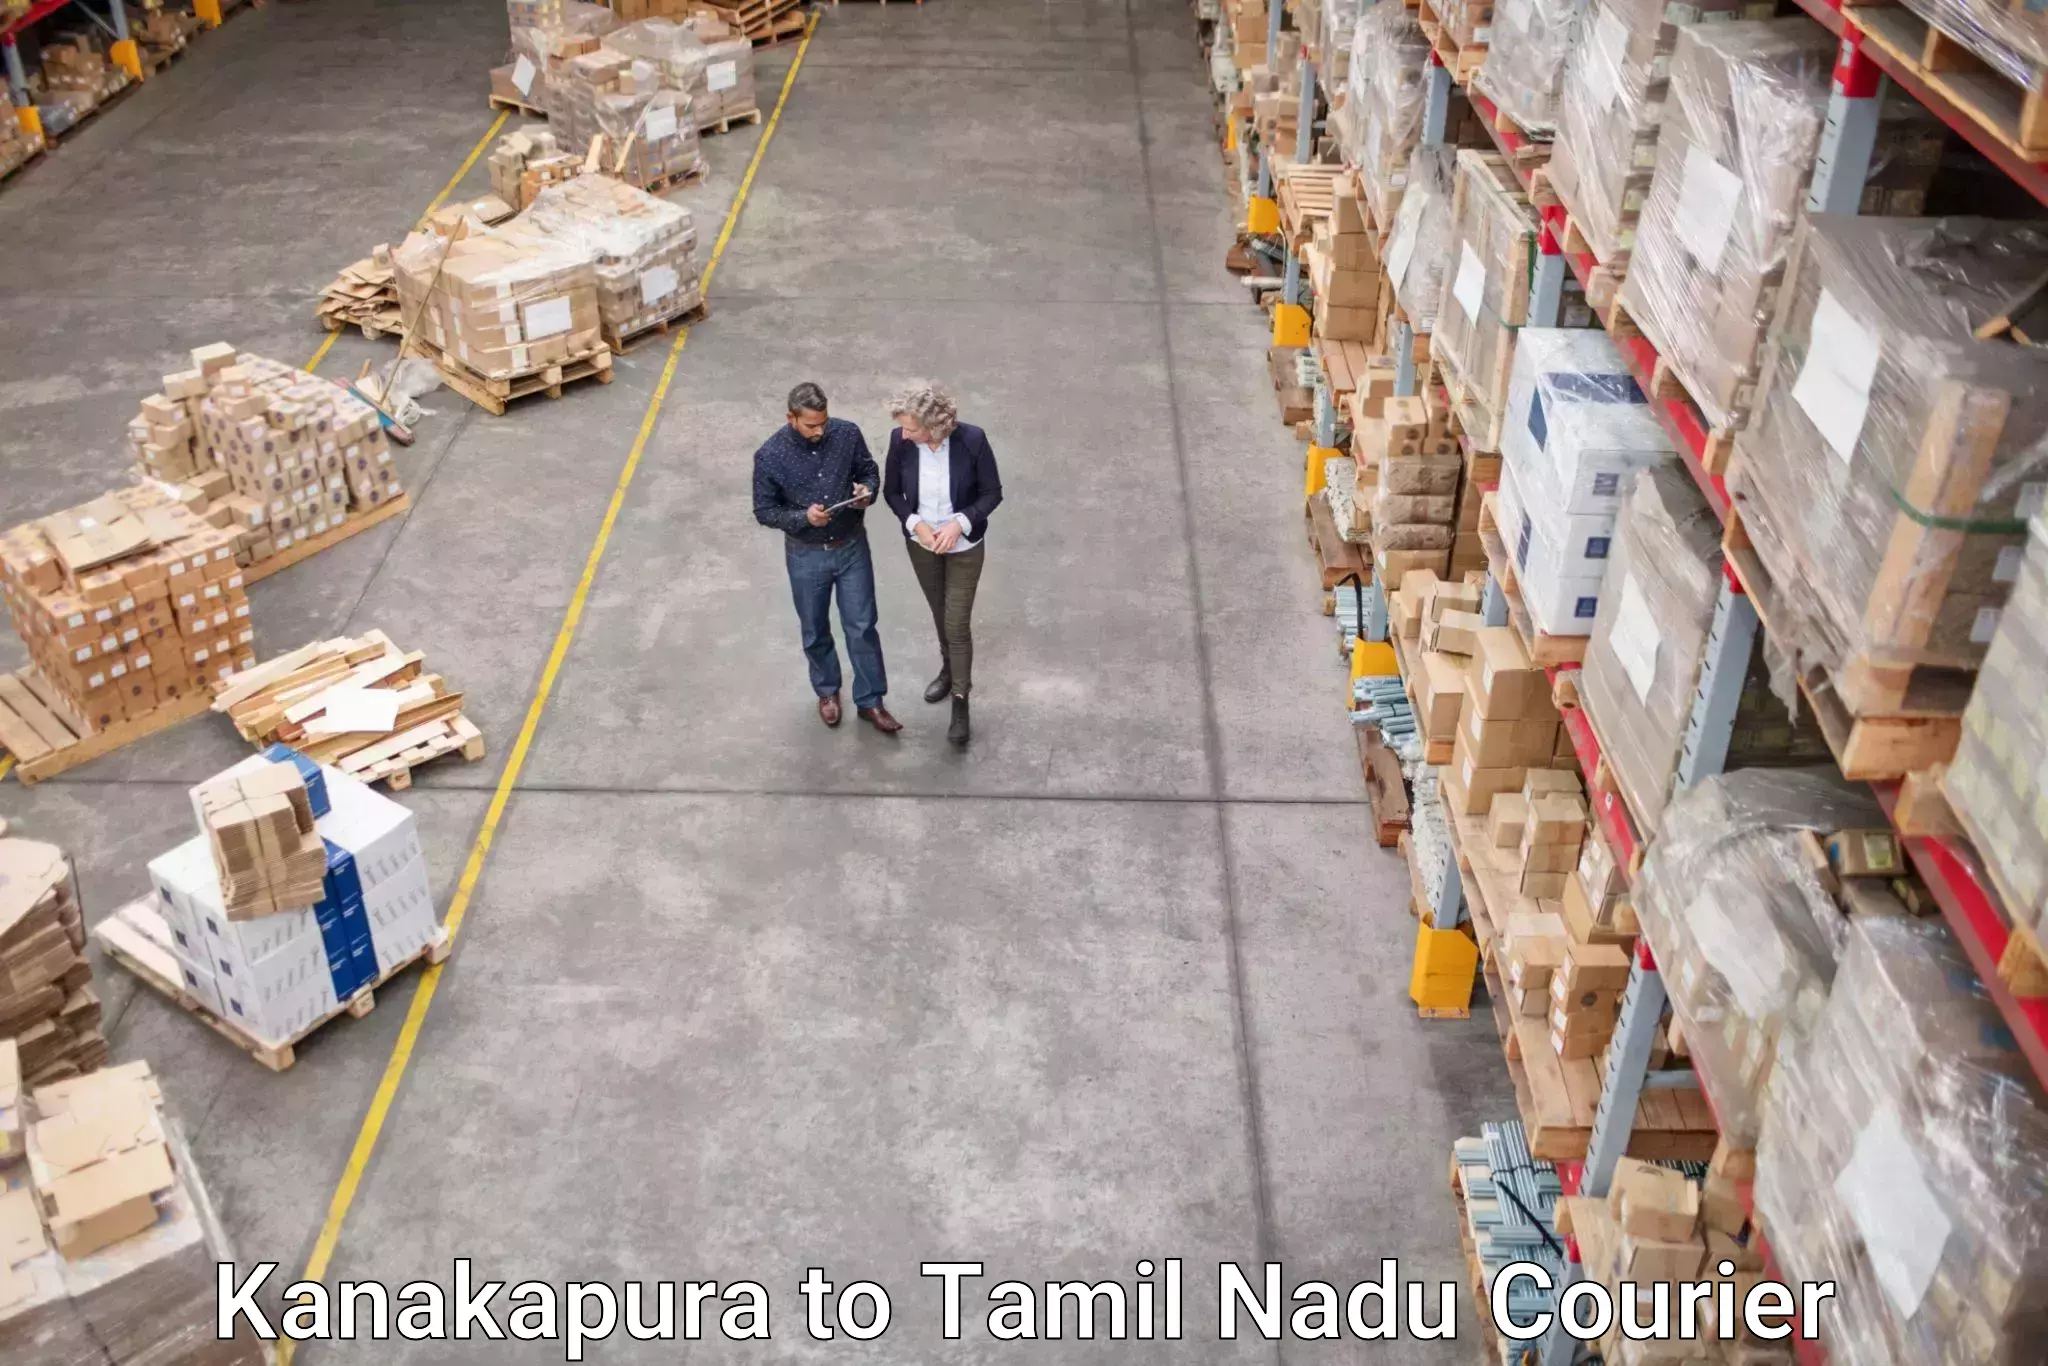 Reliable courier services Kanakapura to Avadi